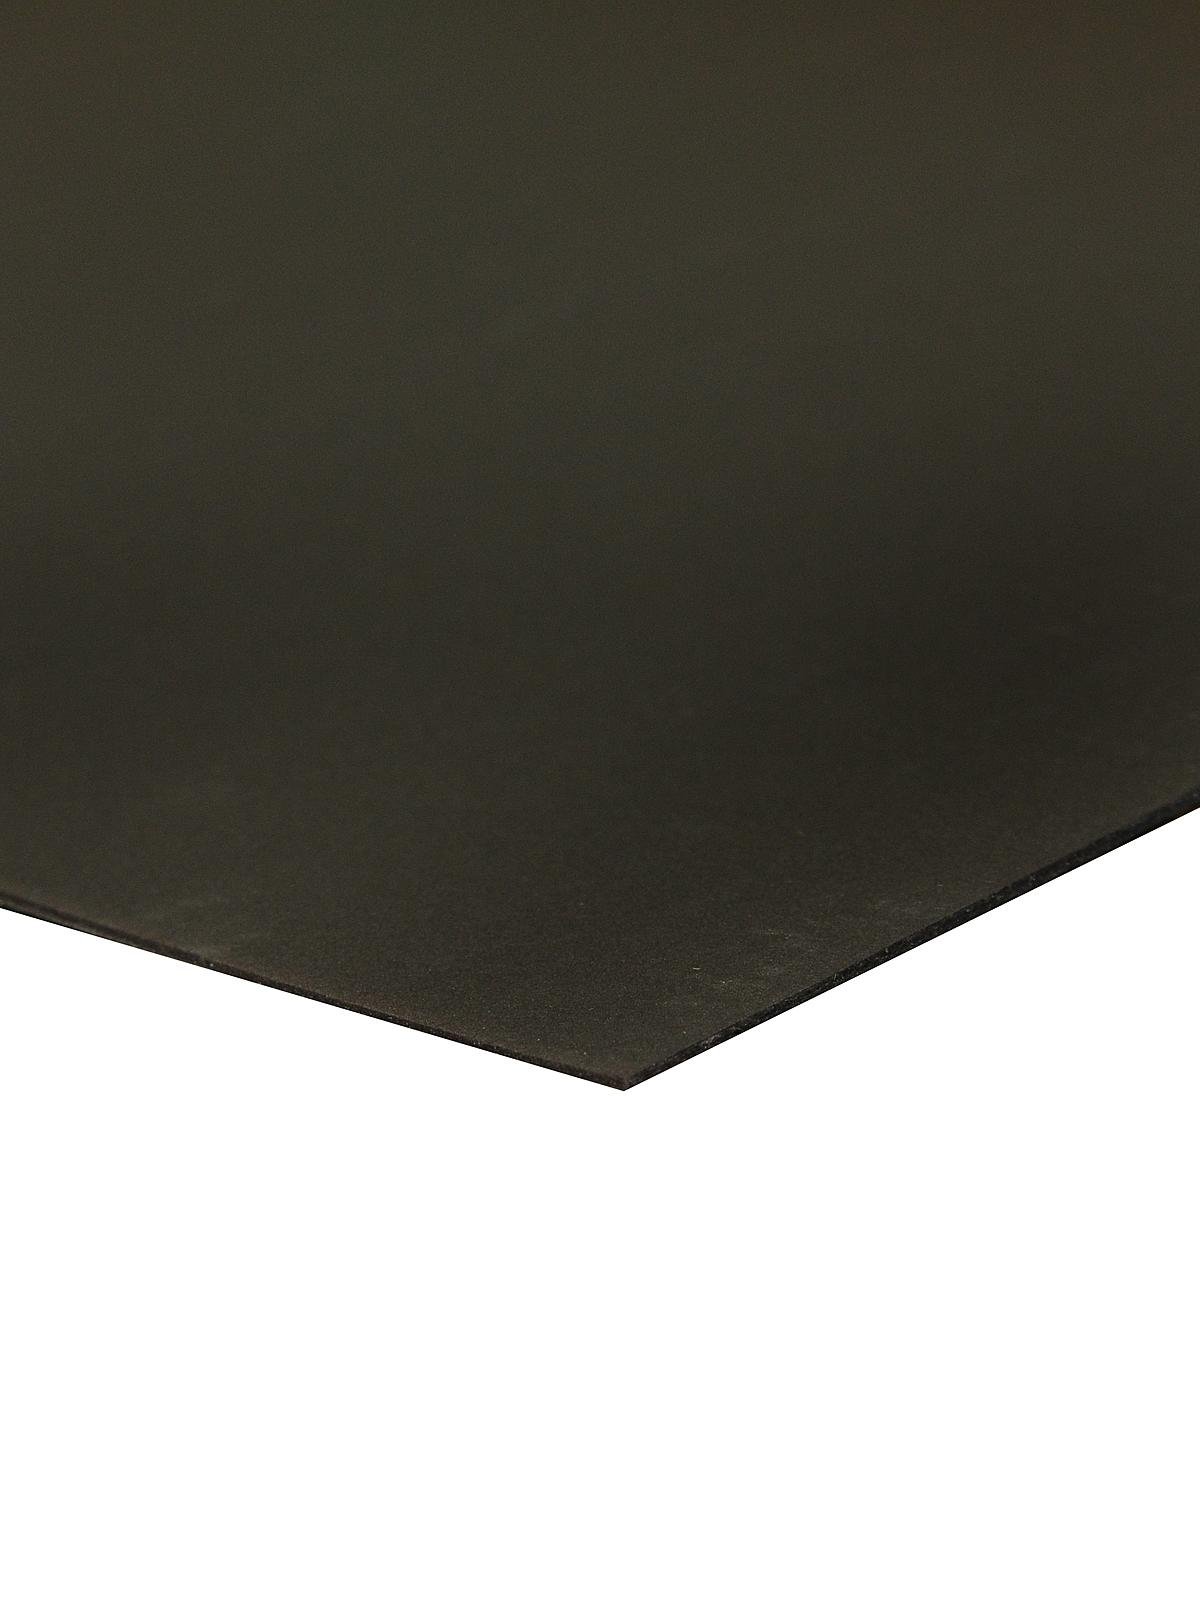 Super Black Presentation & Mounting Boards @ Raw Materials Art